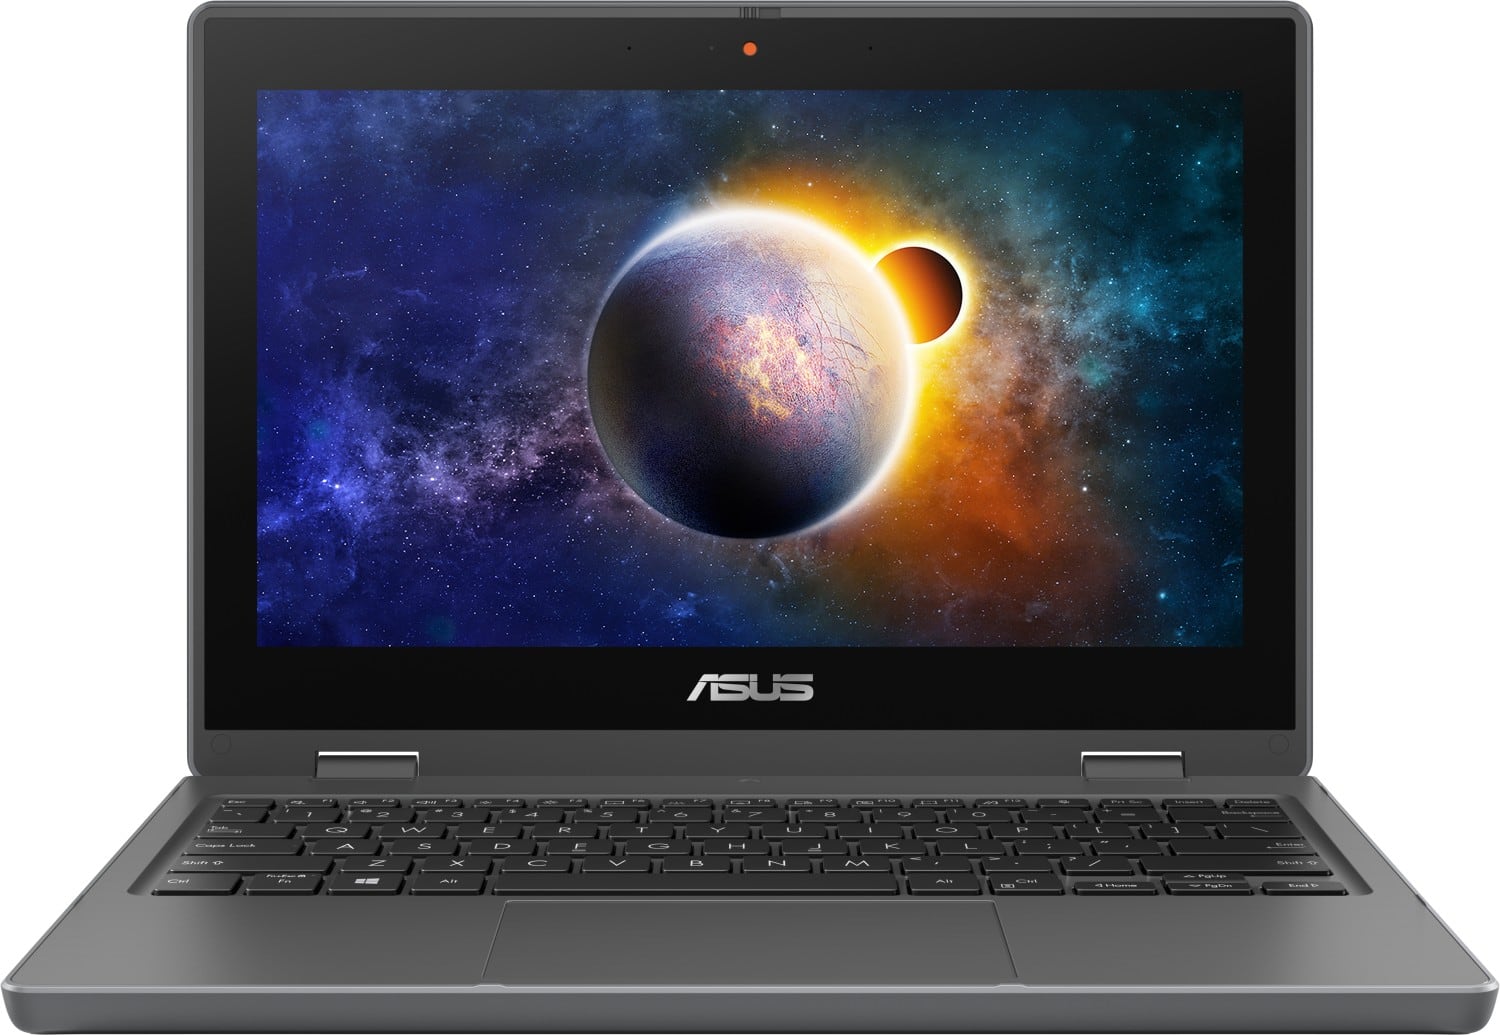 ASUS Flip Design 11,6" HD Touchscreen | Intel Celeron N4500 | 4GB RAM | 64GB eMMC | Windows 10 Pro Education | Convertible Notebook 